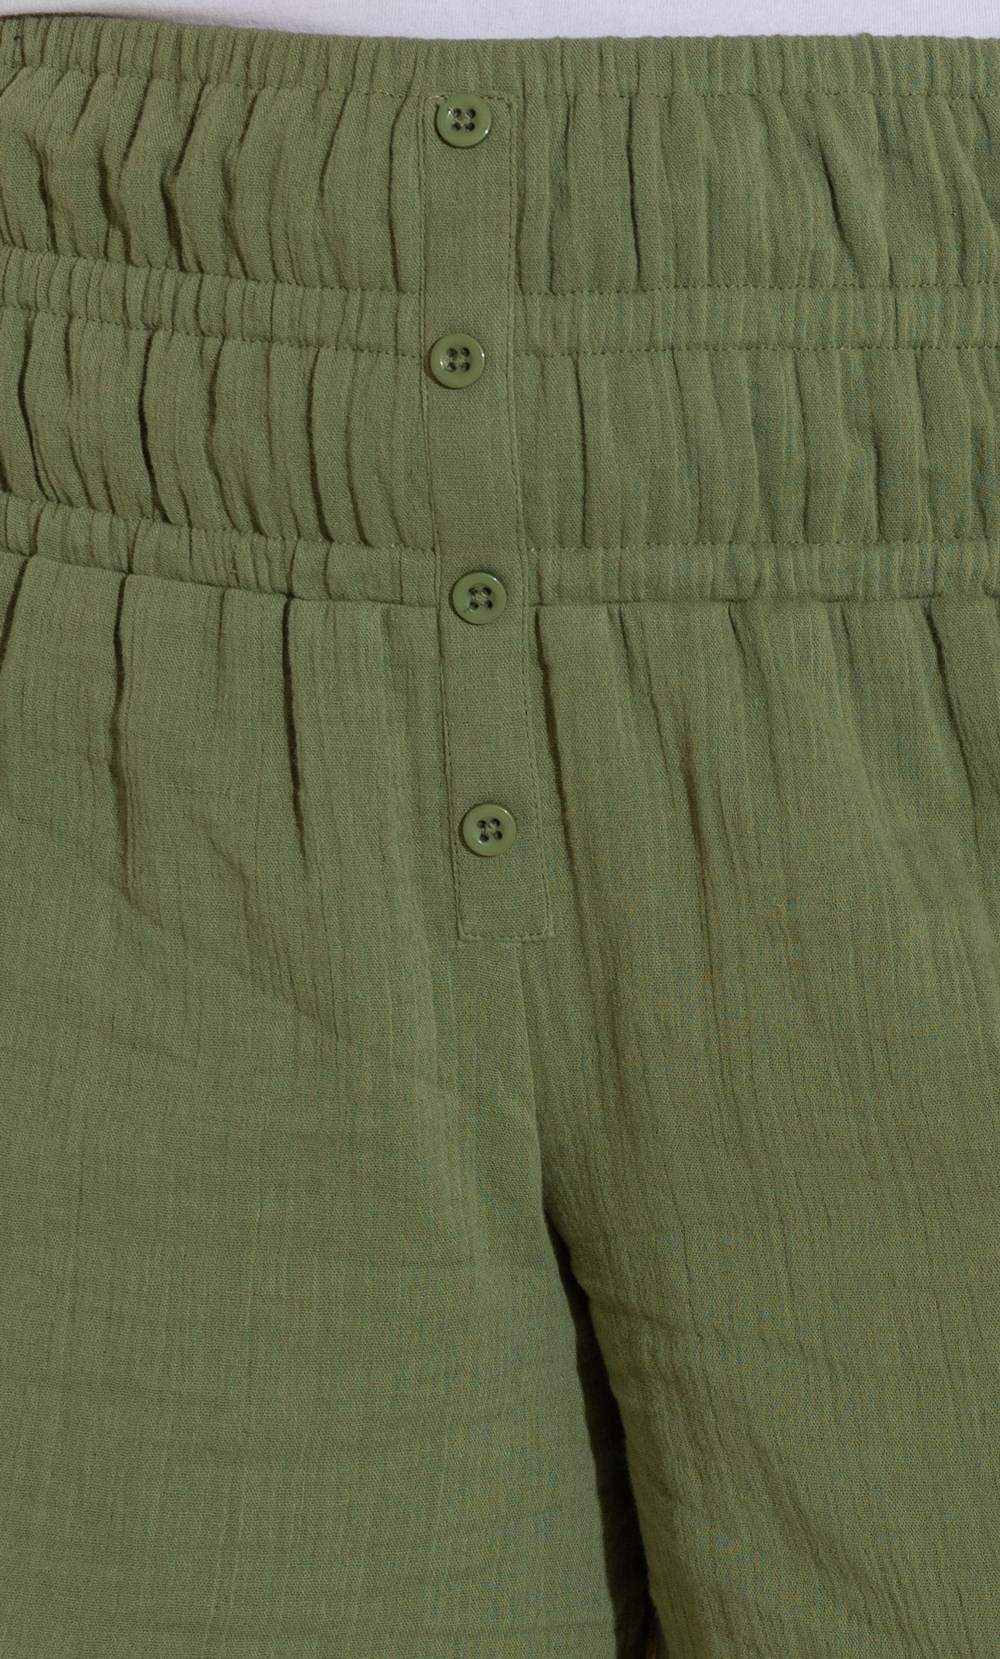 Pull On Textured Cotton Shorts